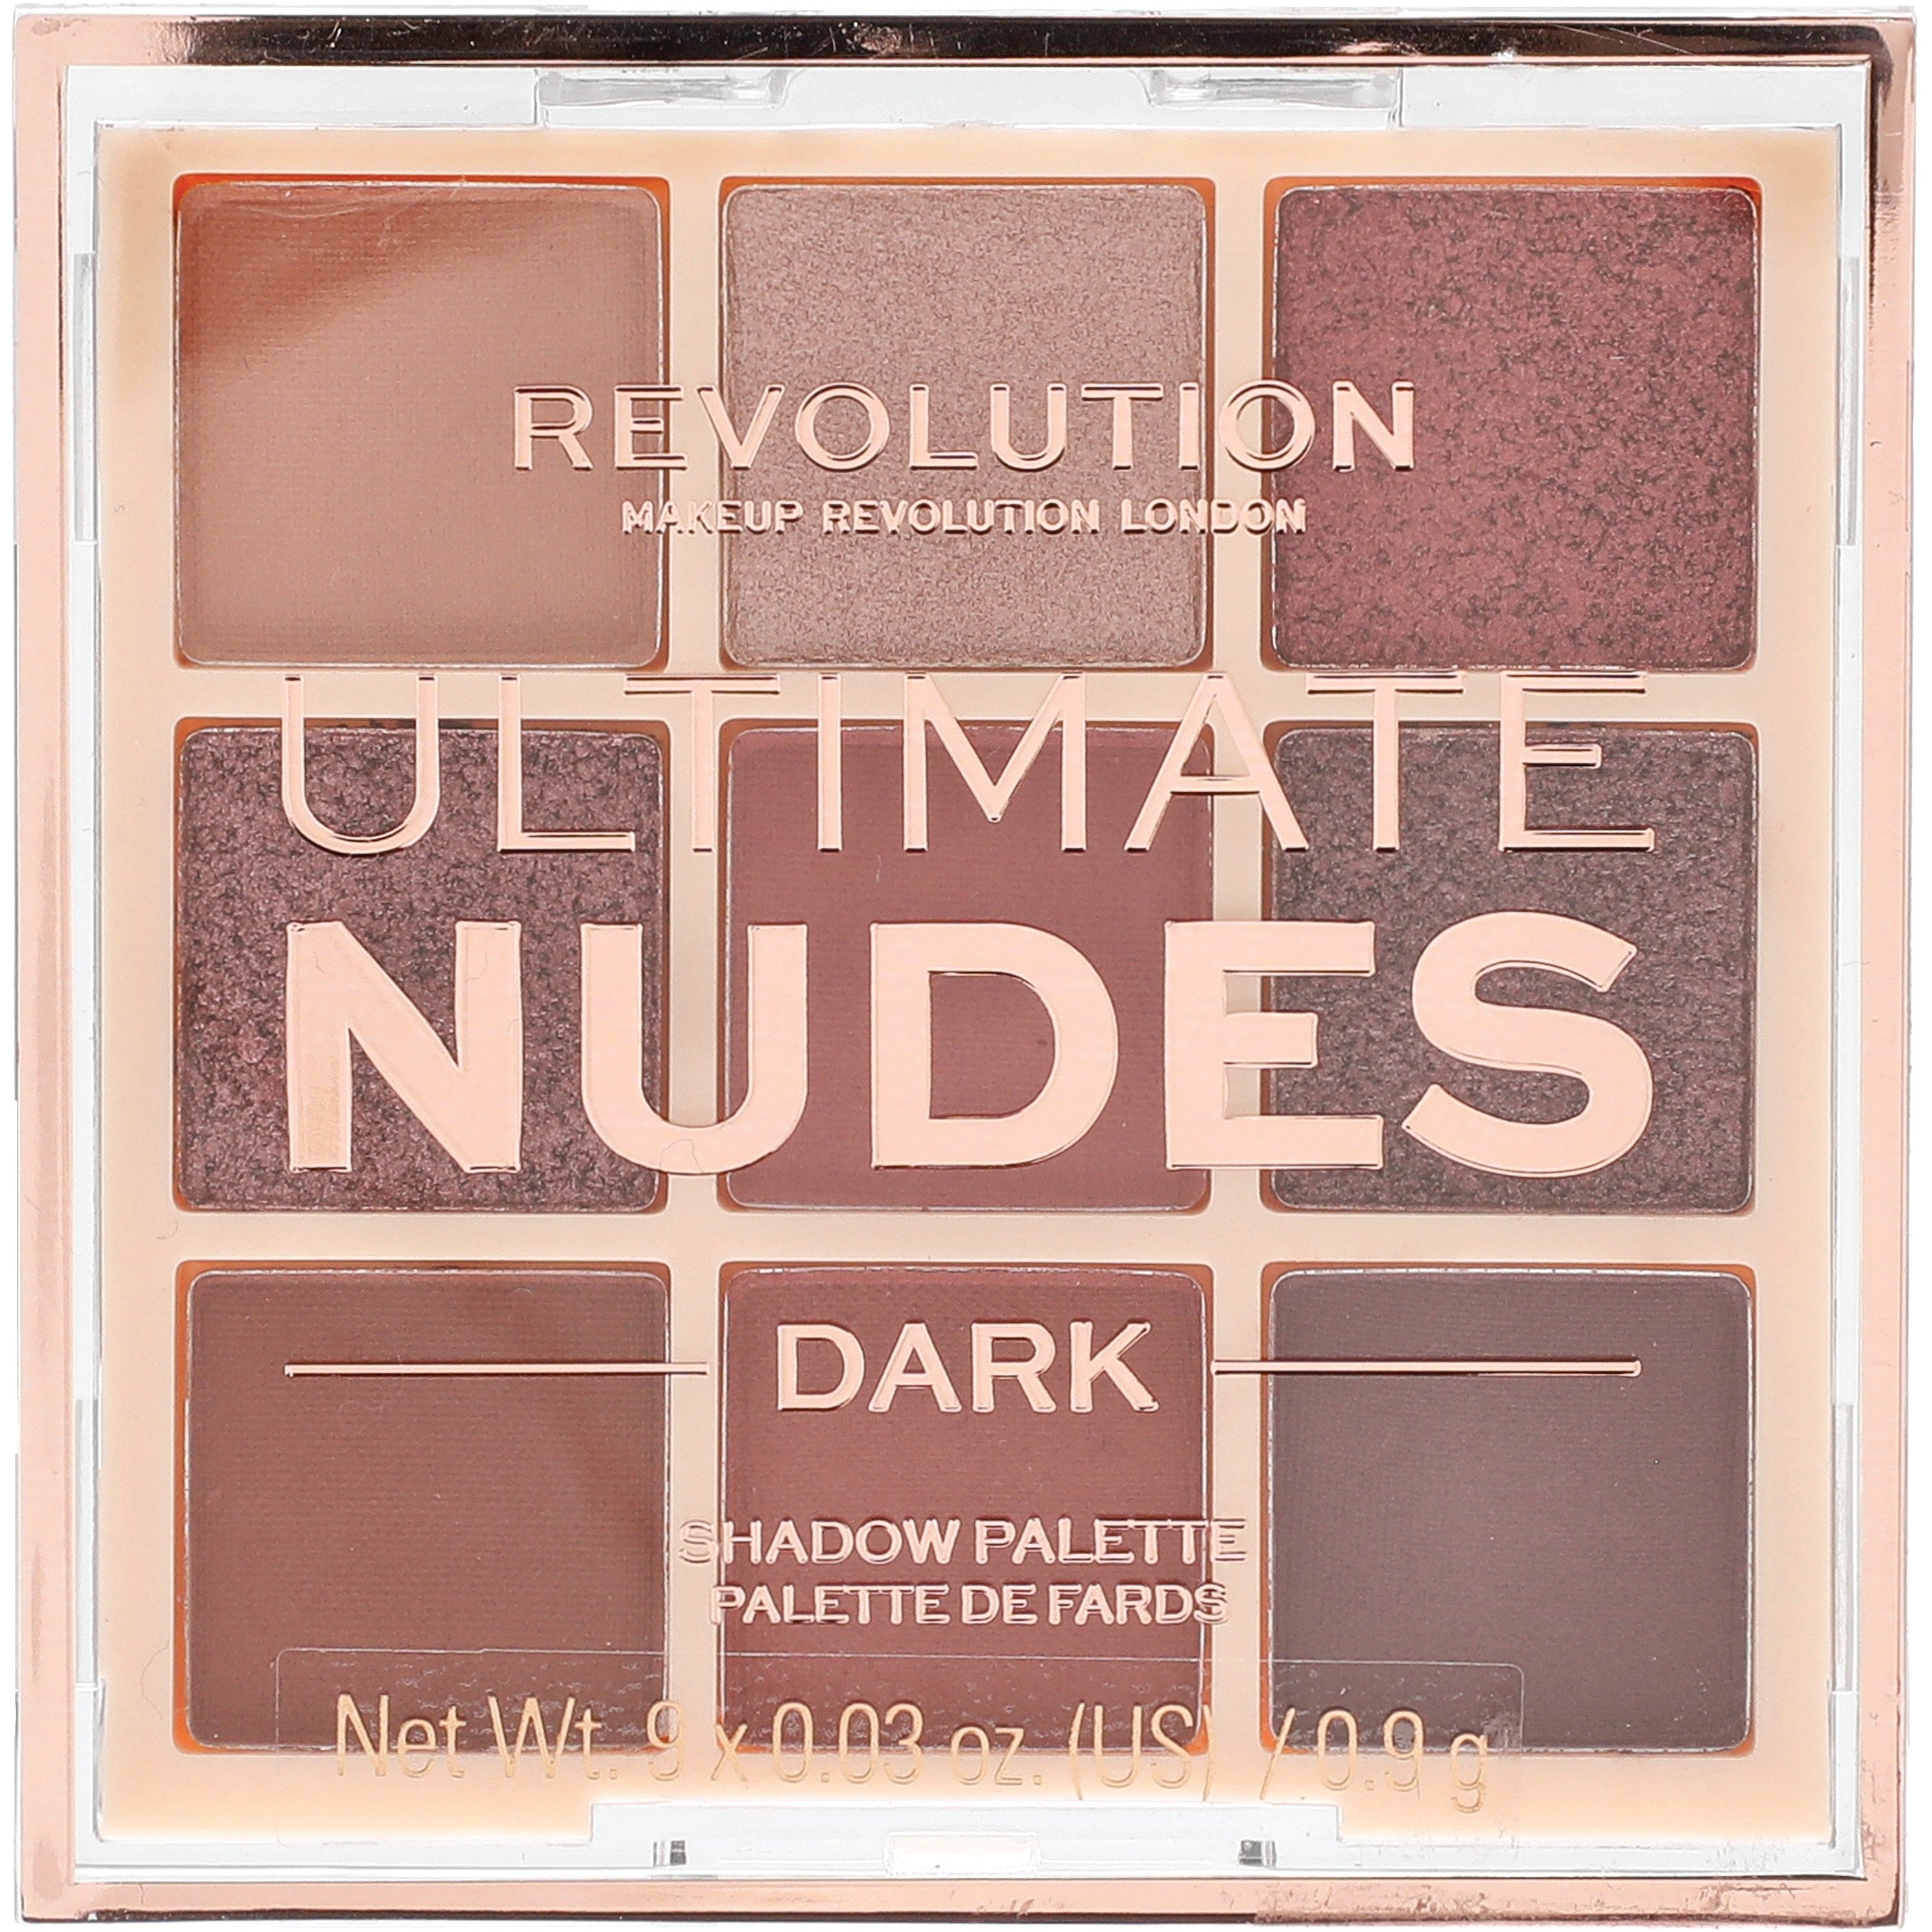 Makeup Revolution Ultimate Nude Eyeshadow Palette Dark Makeup Palettes Sets at H-E-B